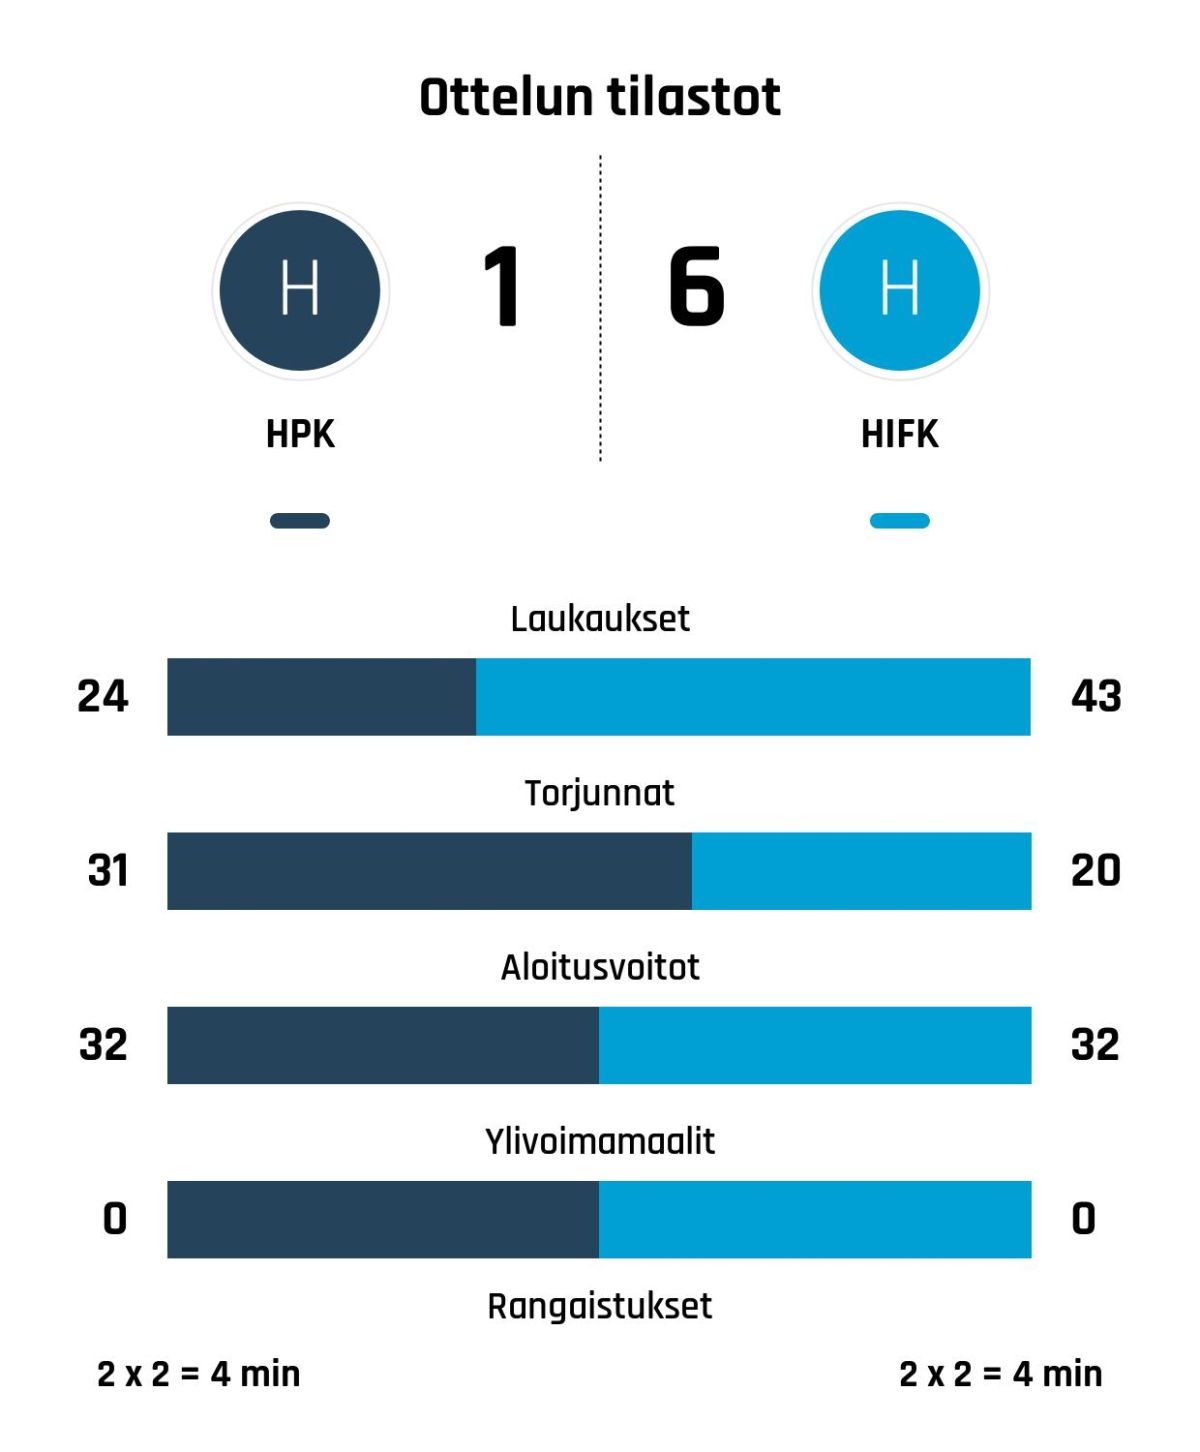 HPK jäi HIFK:n jyrän alle